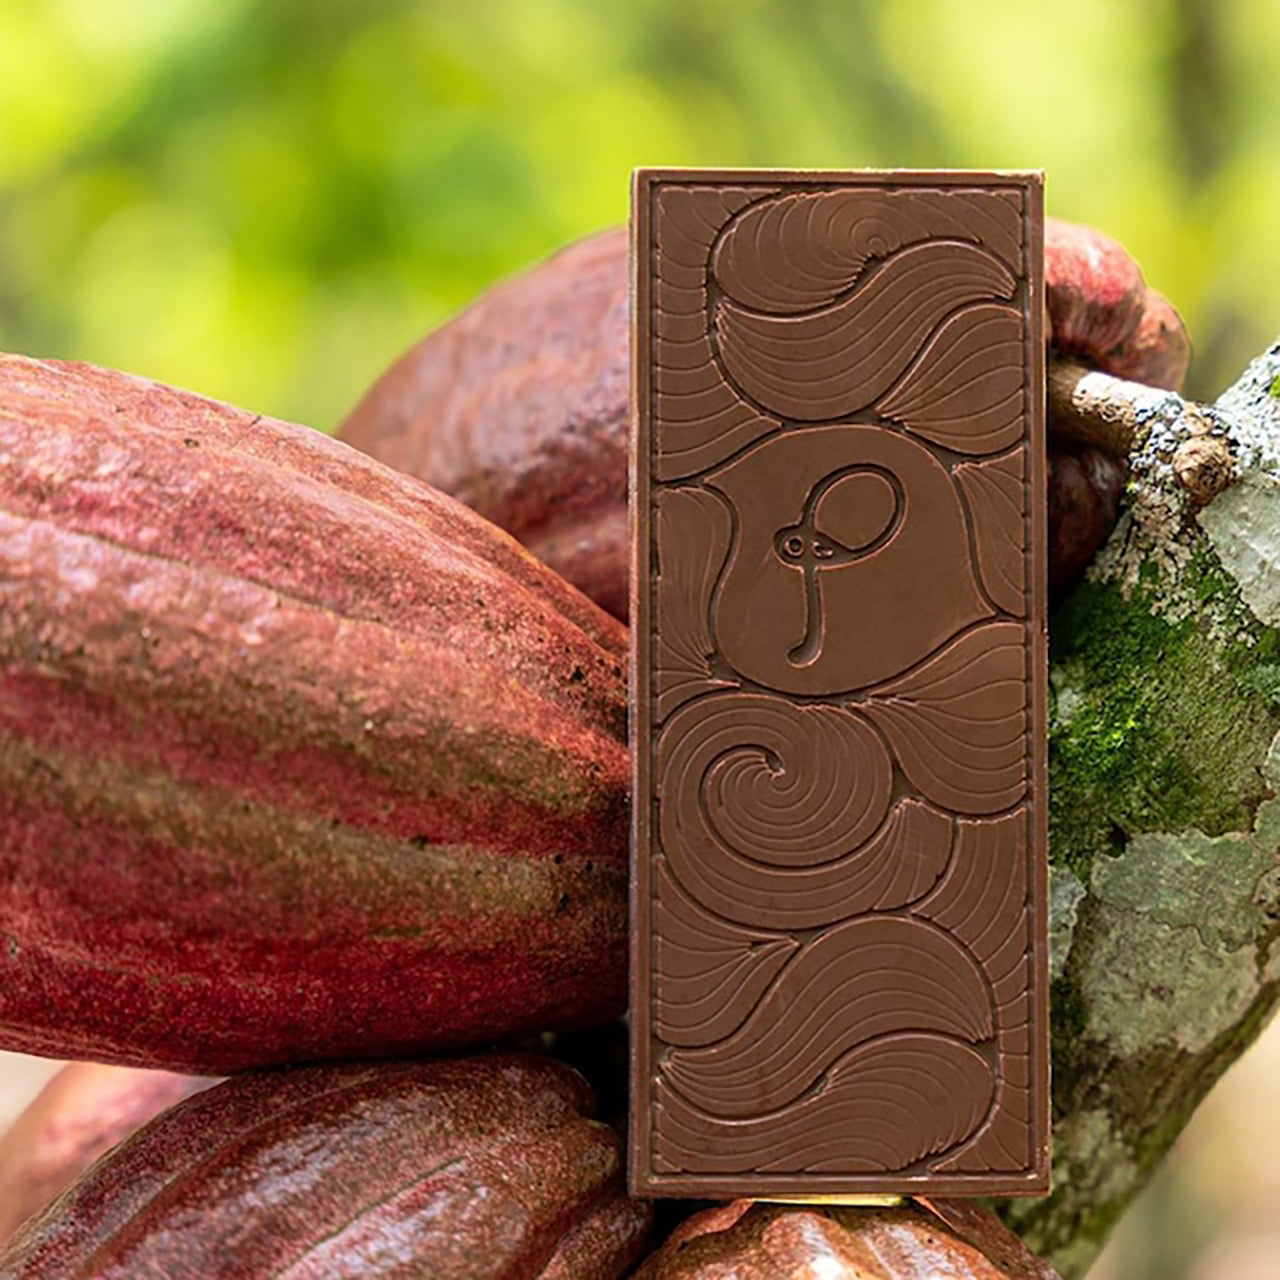 PALATO Chocolate パラトチョコレート 80%カカオ ダークチョコレート